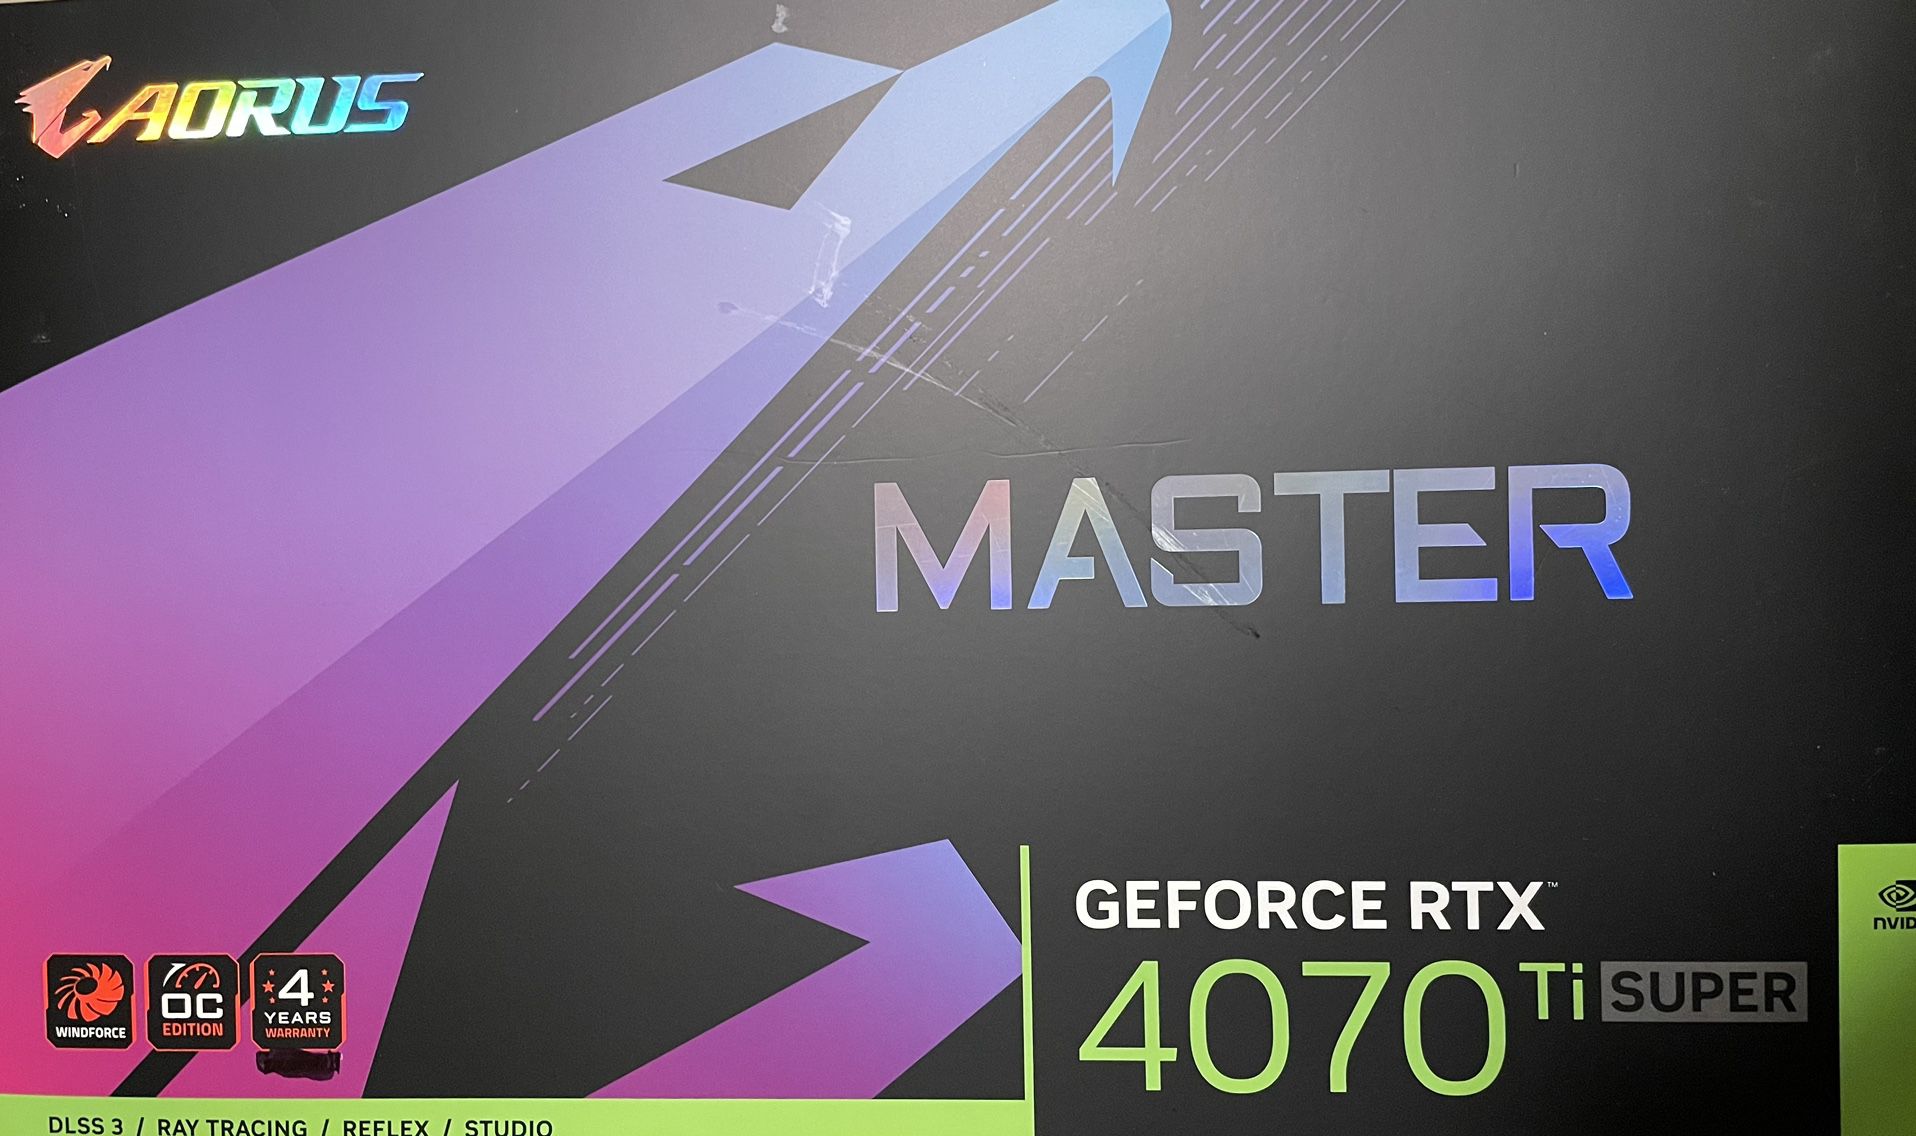 GeForce RTX 4070 Ti Super 16 Gig